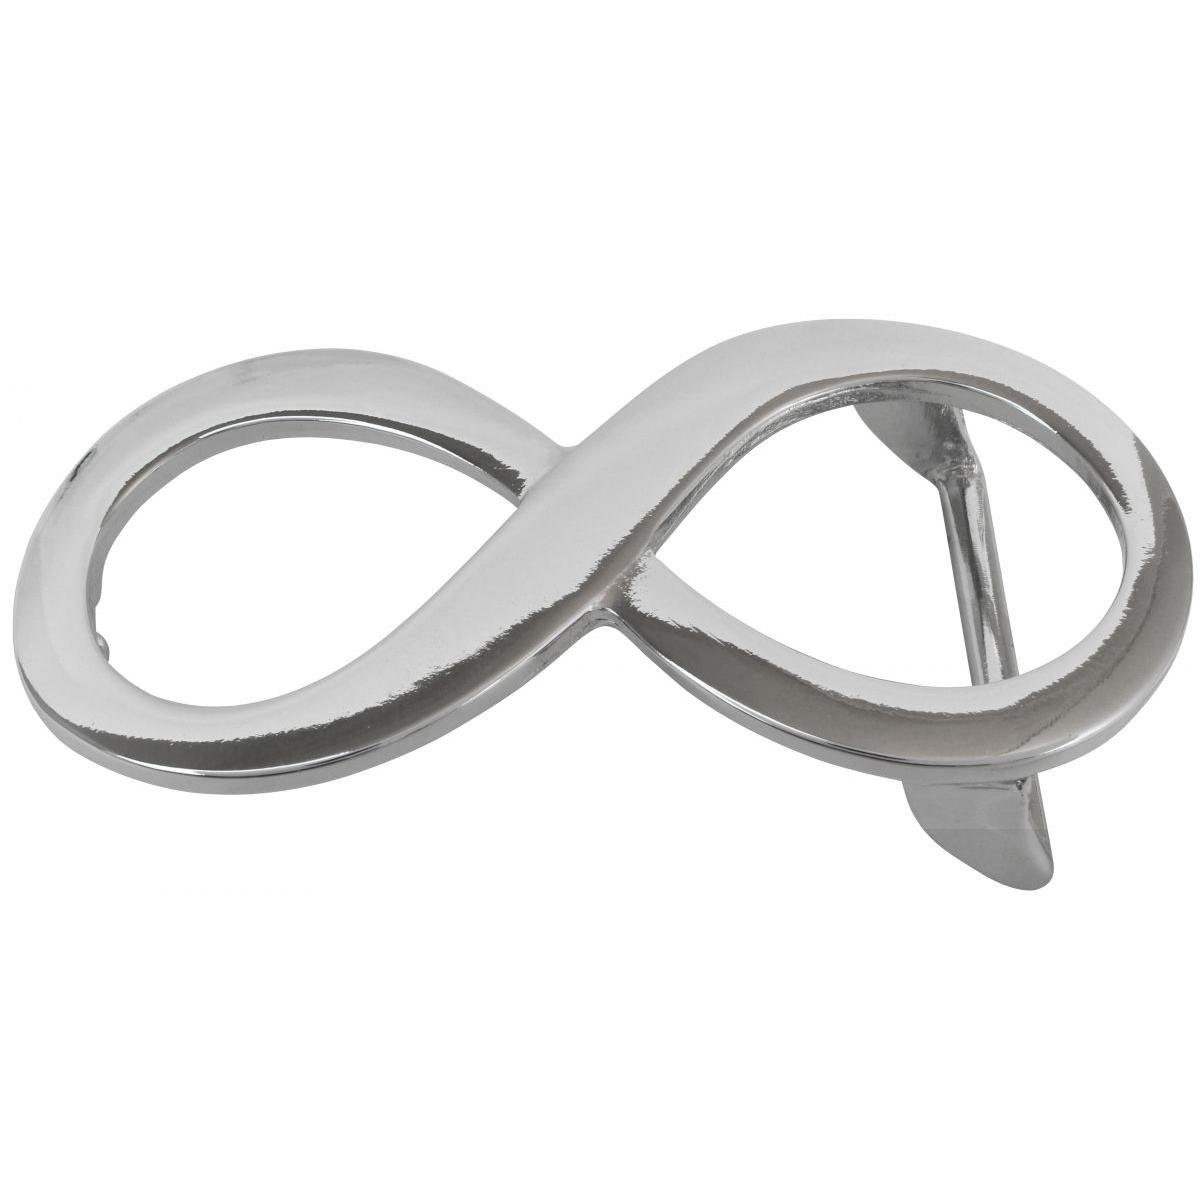 BELTINGER Gürtelschnalle Infinity 4,0 cm - Buckle Wechselschließe Gürtelschließe 40mm - Gürtel Silber glänzend